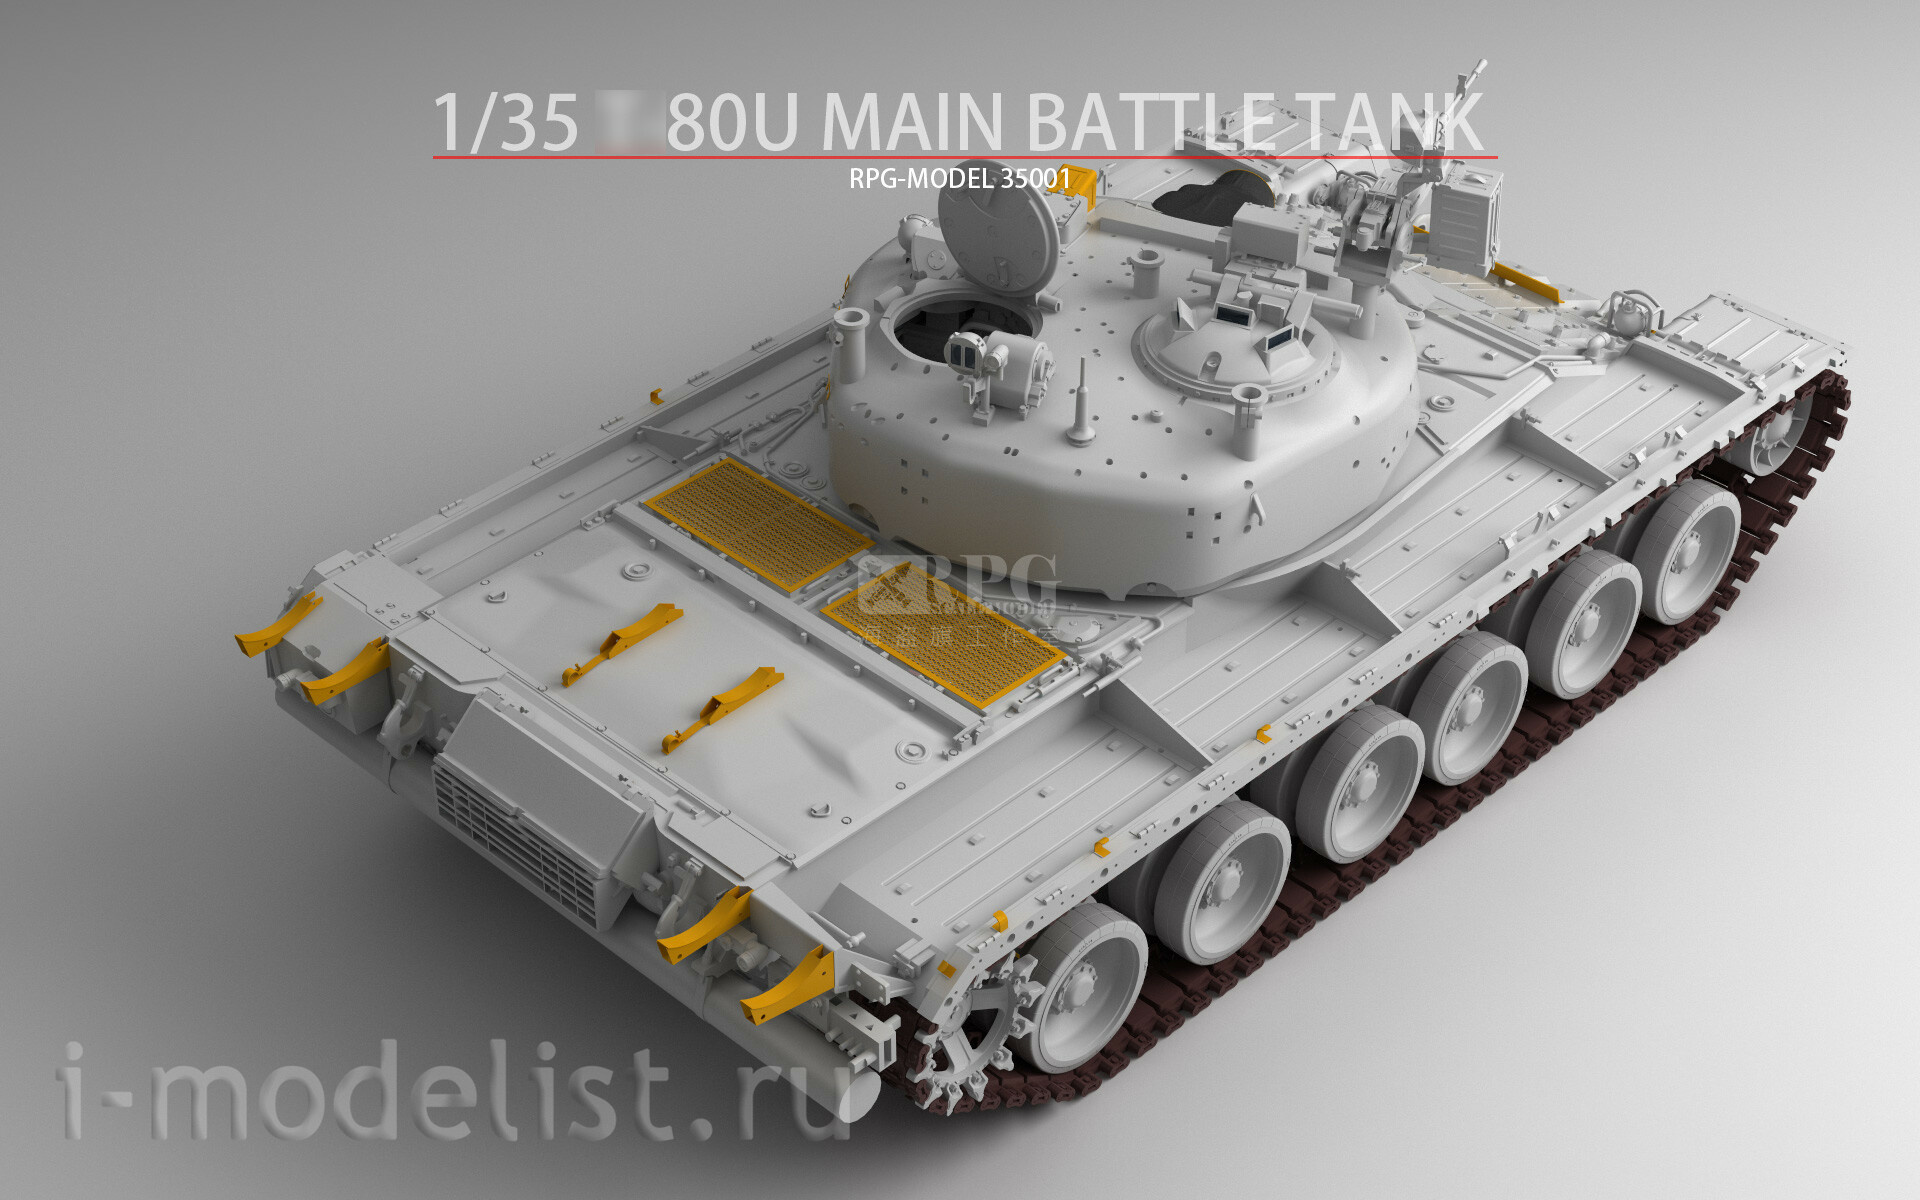 35001A RPG-MODEL 1/35 Танк тип 80U + фигуры солдат